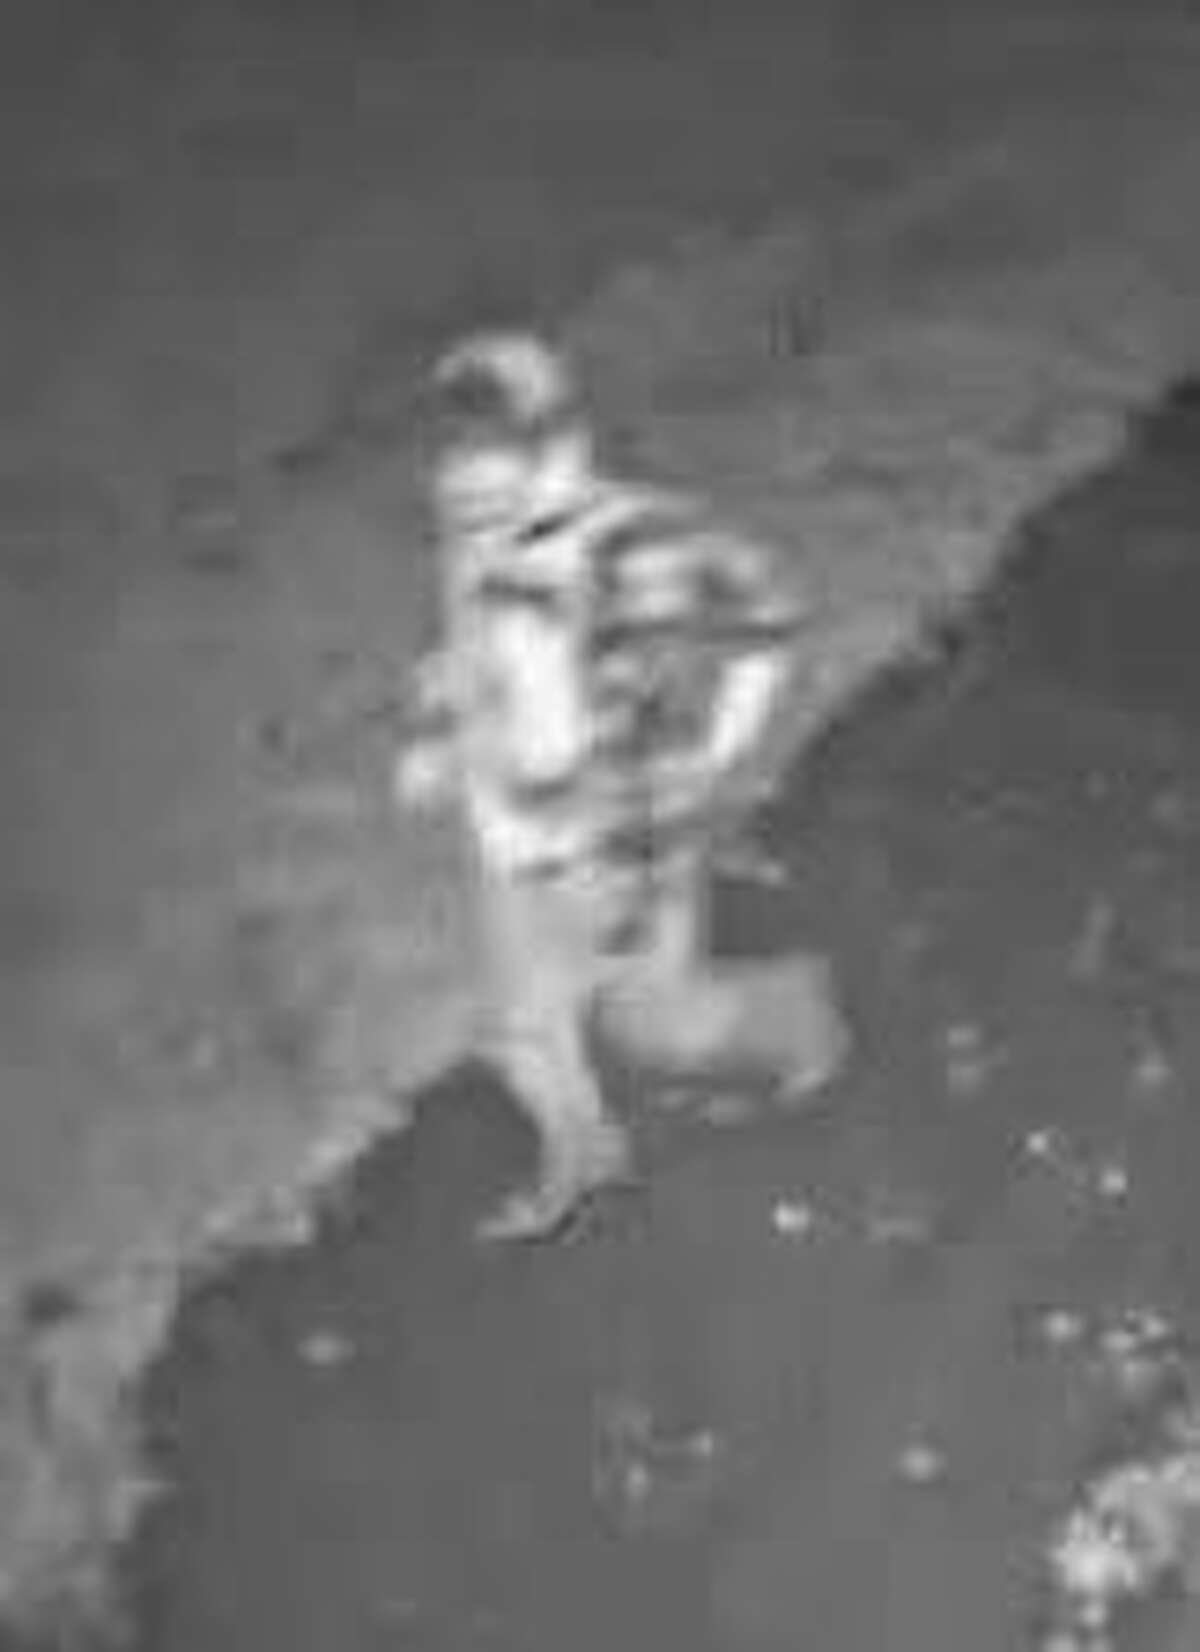 Surveillance photos of the suspected burglar.